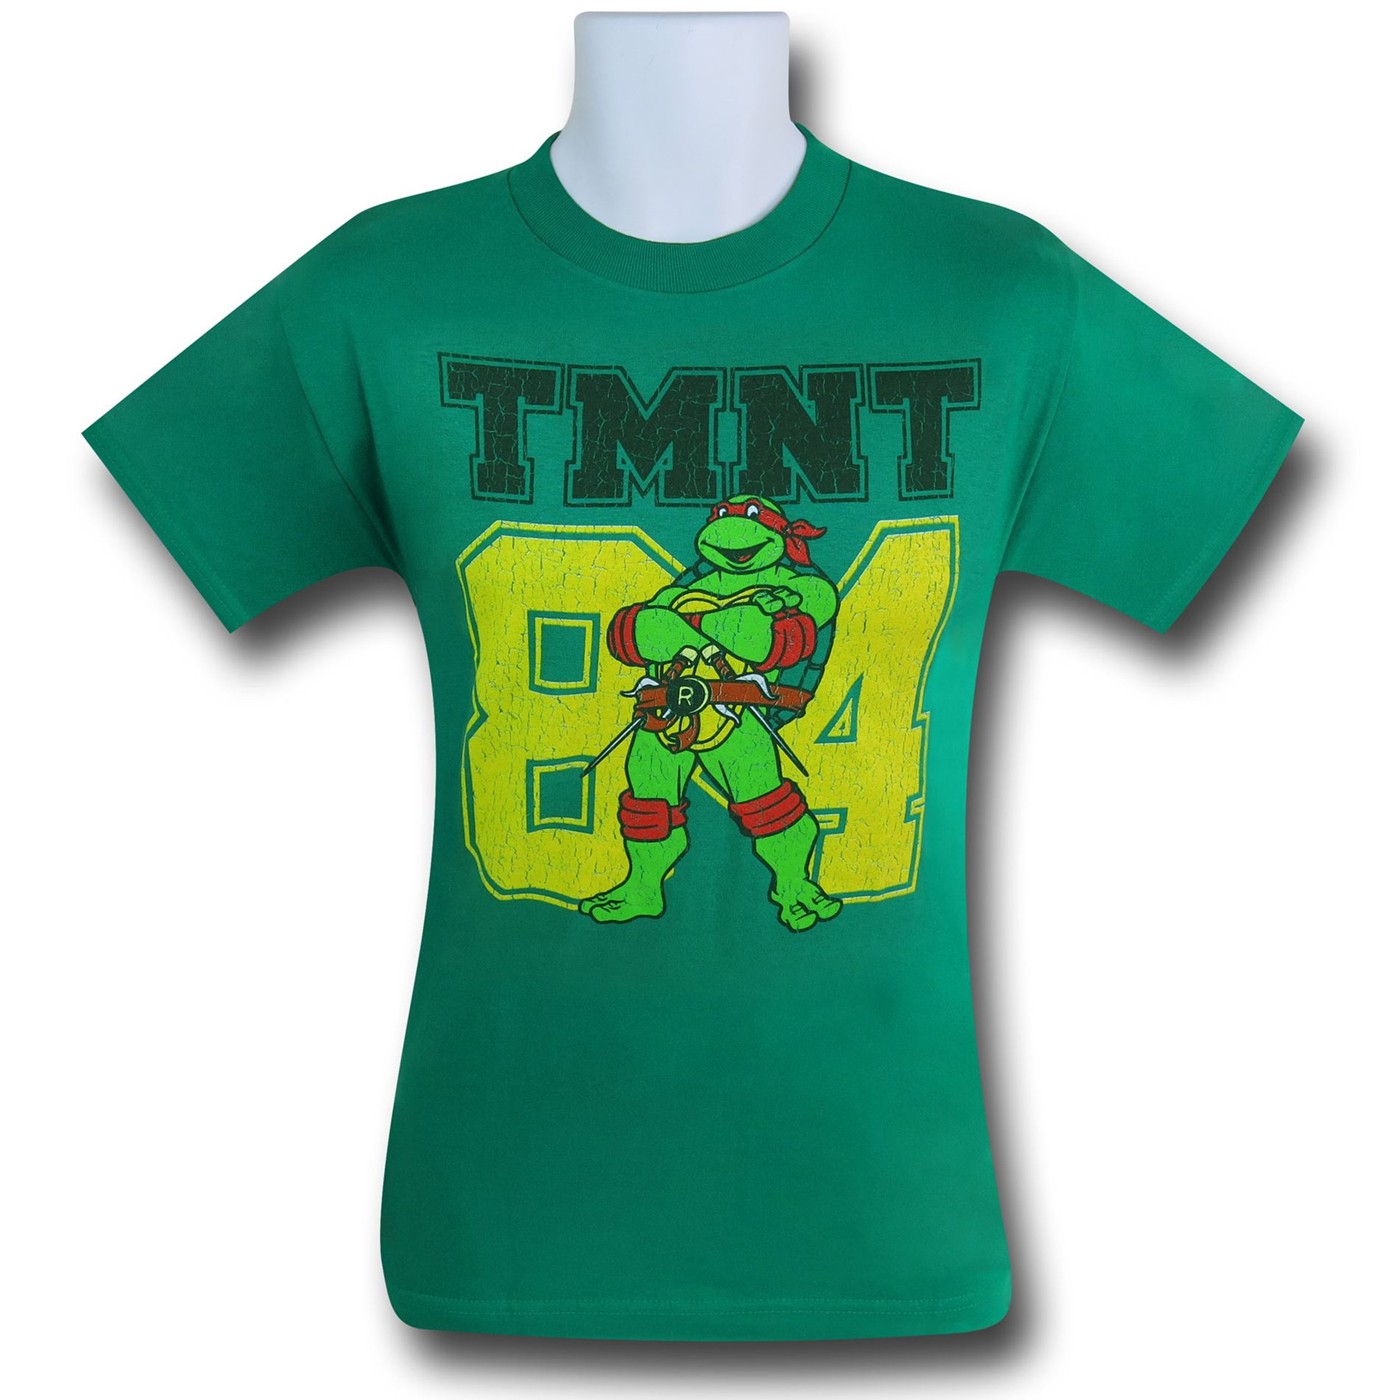 TMNT '84 on Green T-Shirt